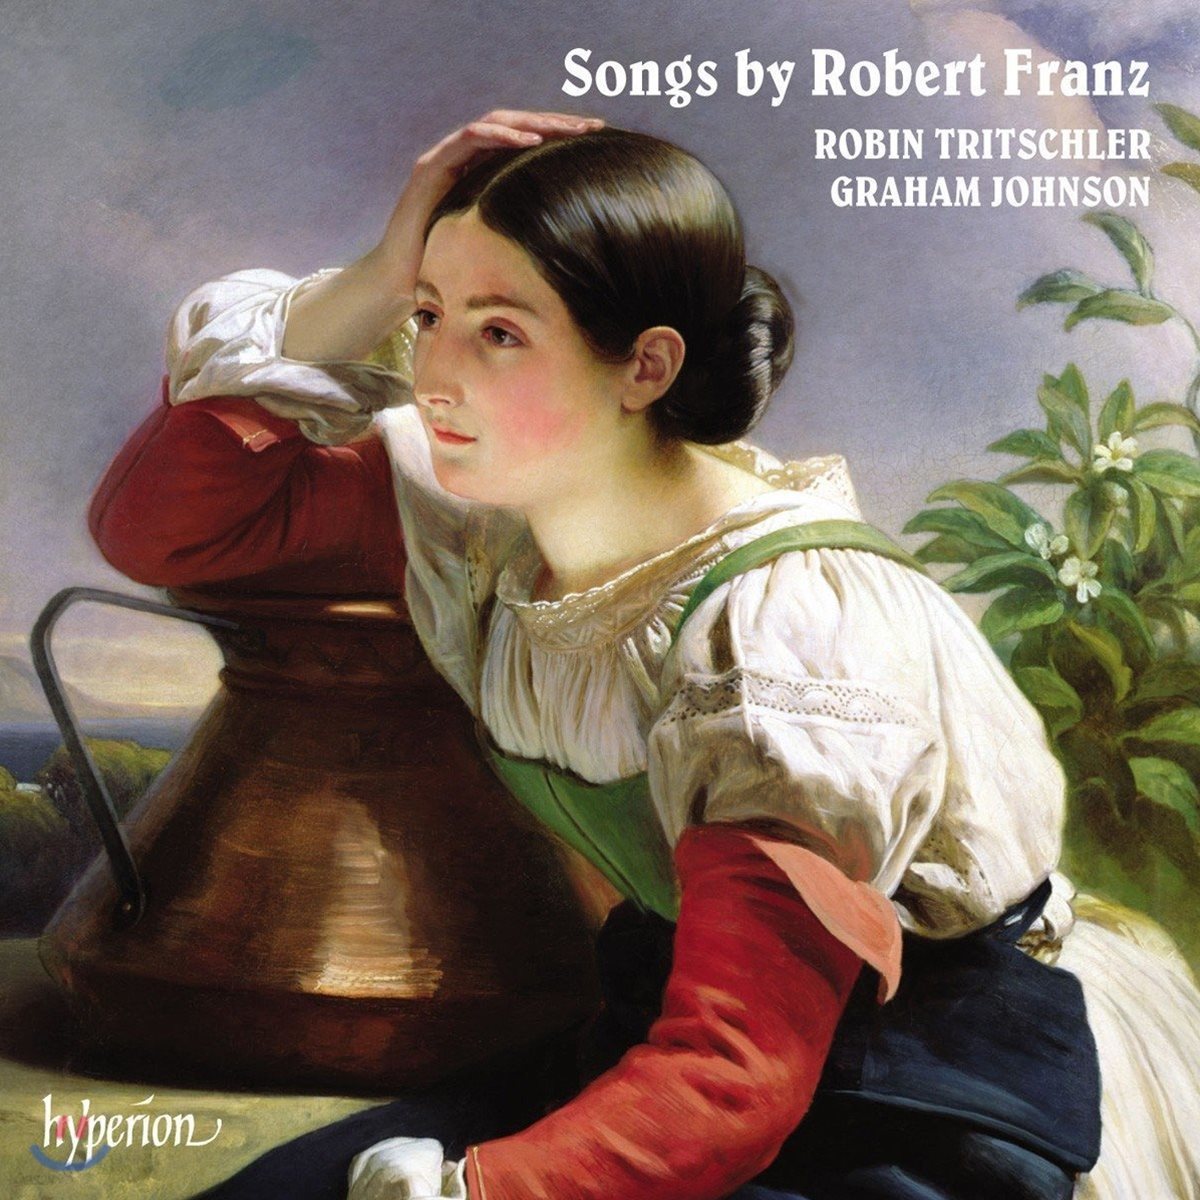 Robin Tritschler 로베르트 프란츠: 가곡집 - 로빈 트리츌러, 그레이엄 존슨 (Songs By Robert Franz)